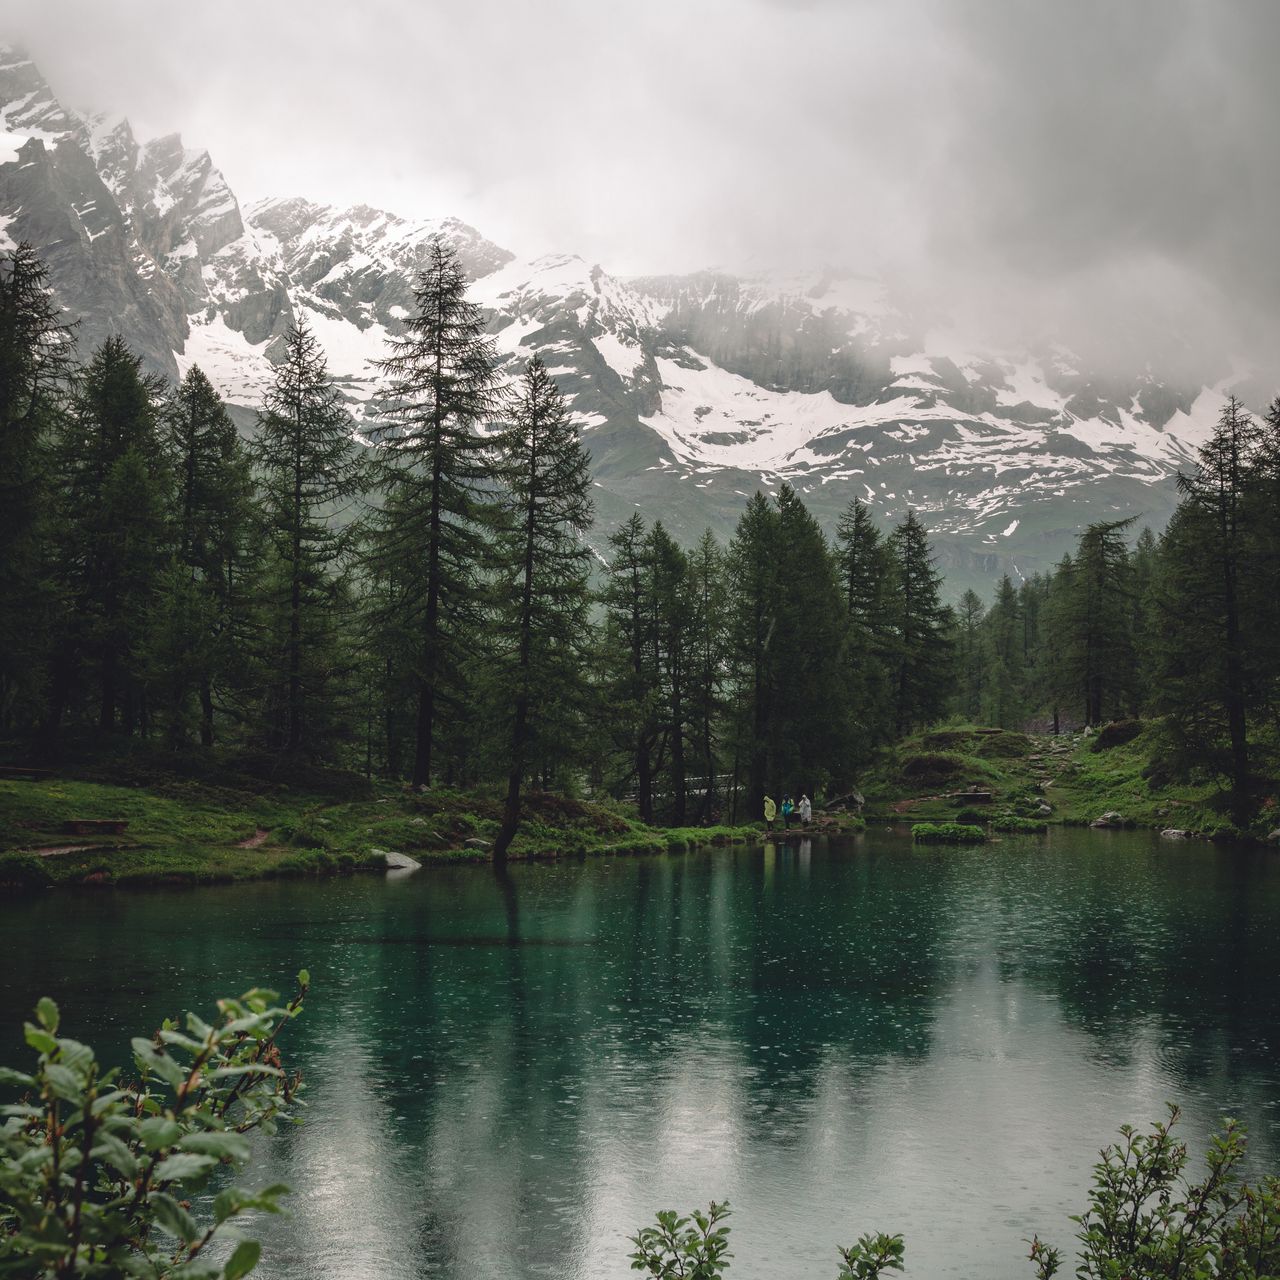 Download wallpaper 1280x1280 lake, mountains, trees, rain, nature ipad, ipad ipad mini for parallax HD background